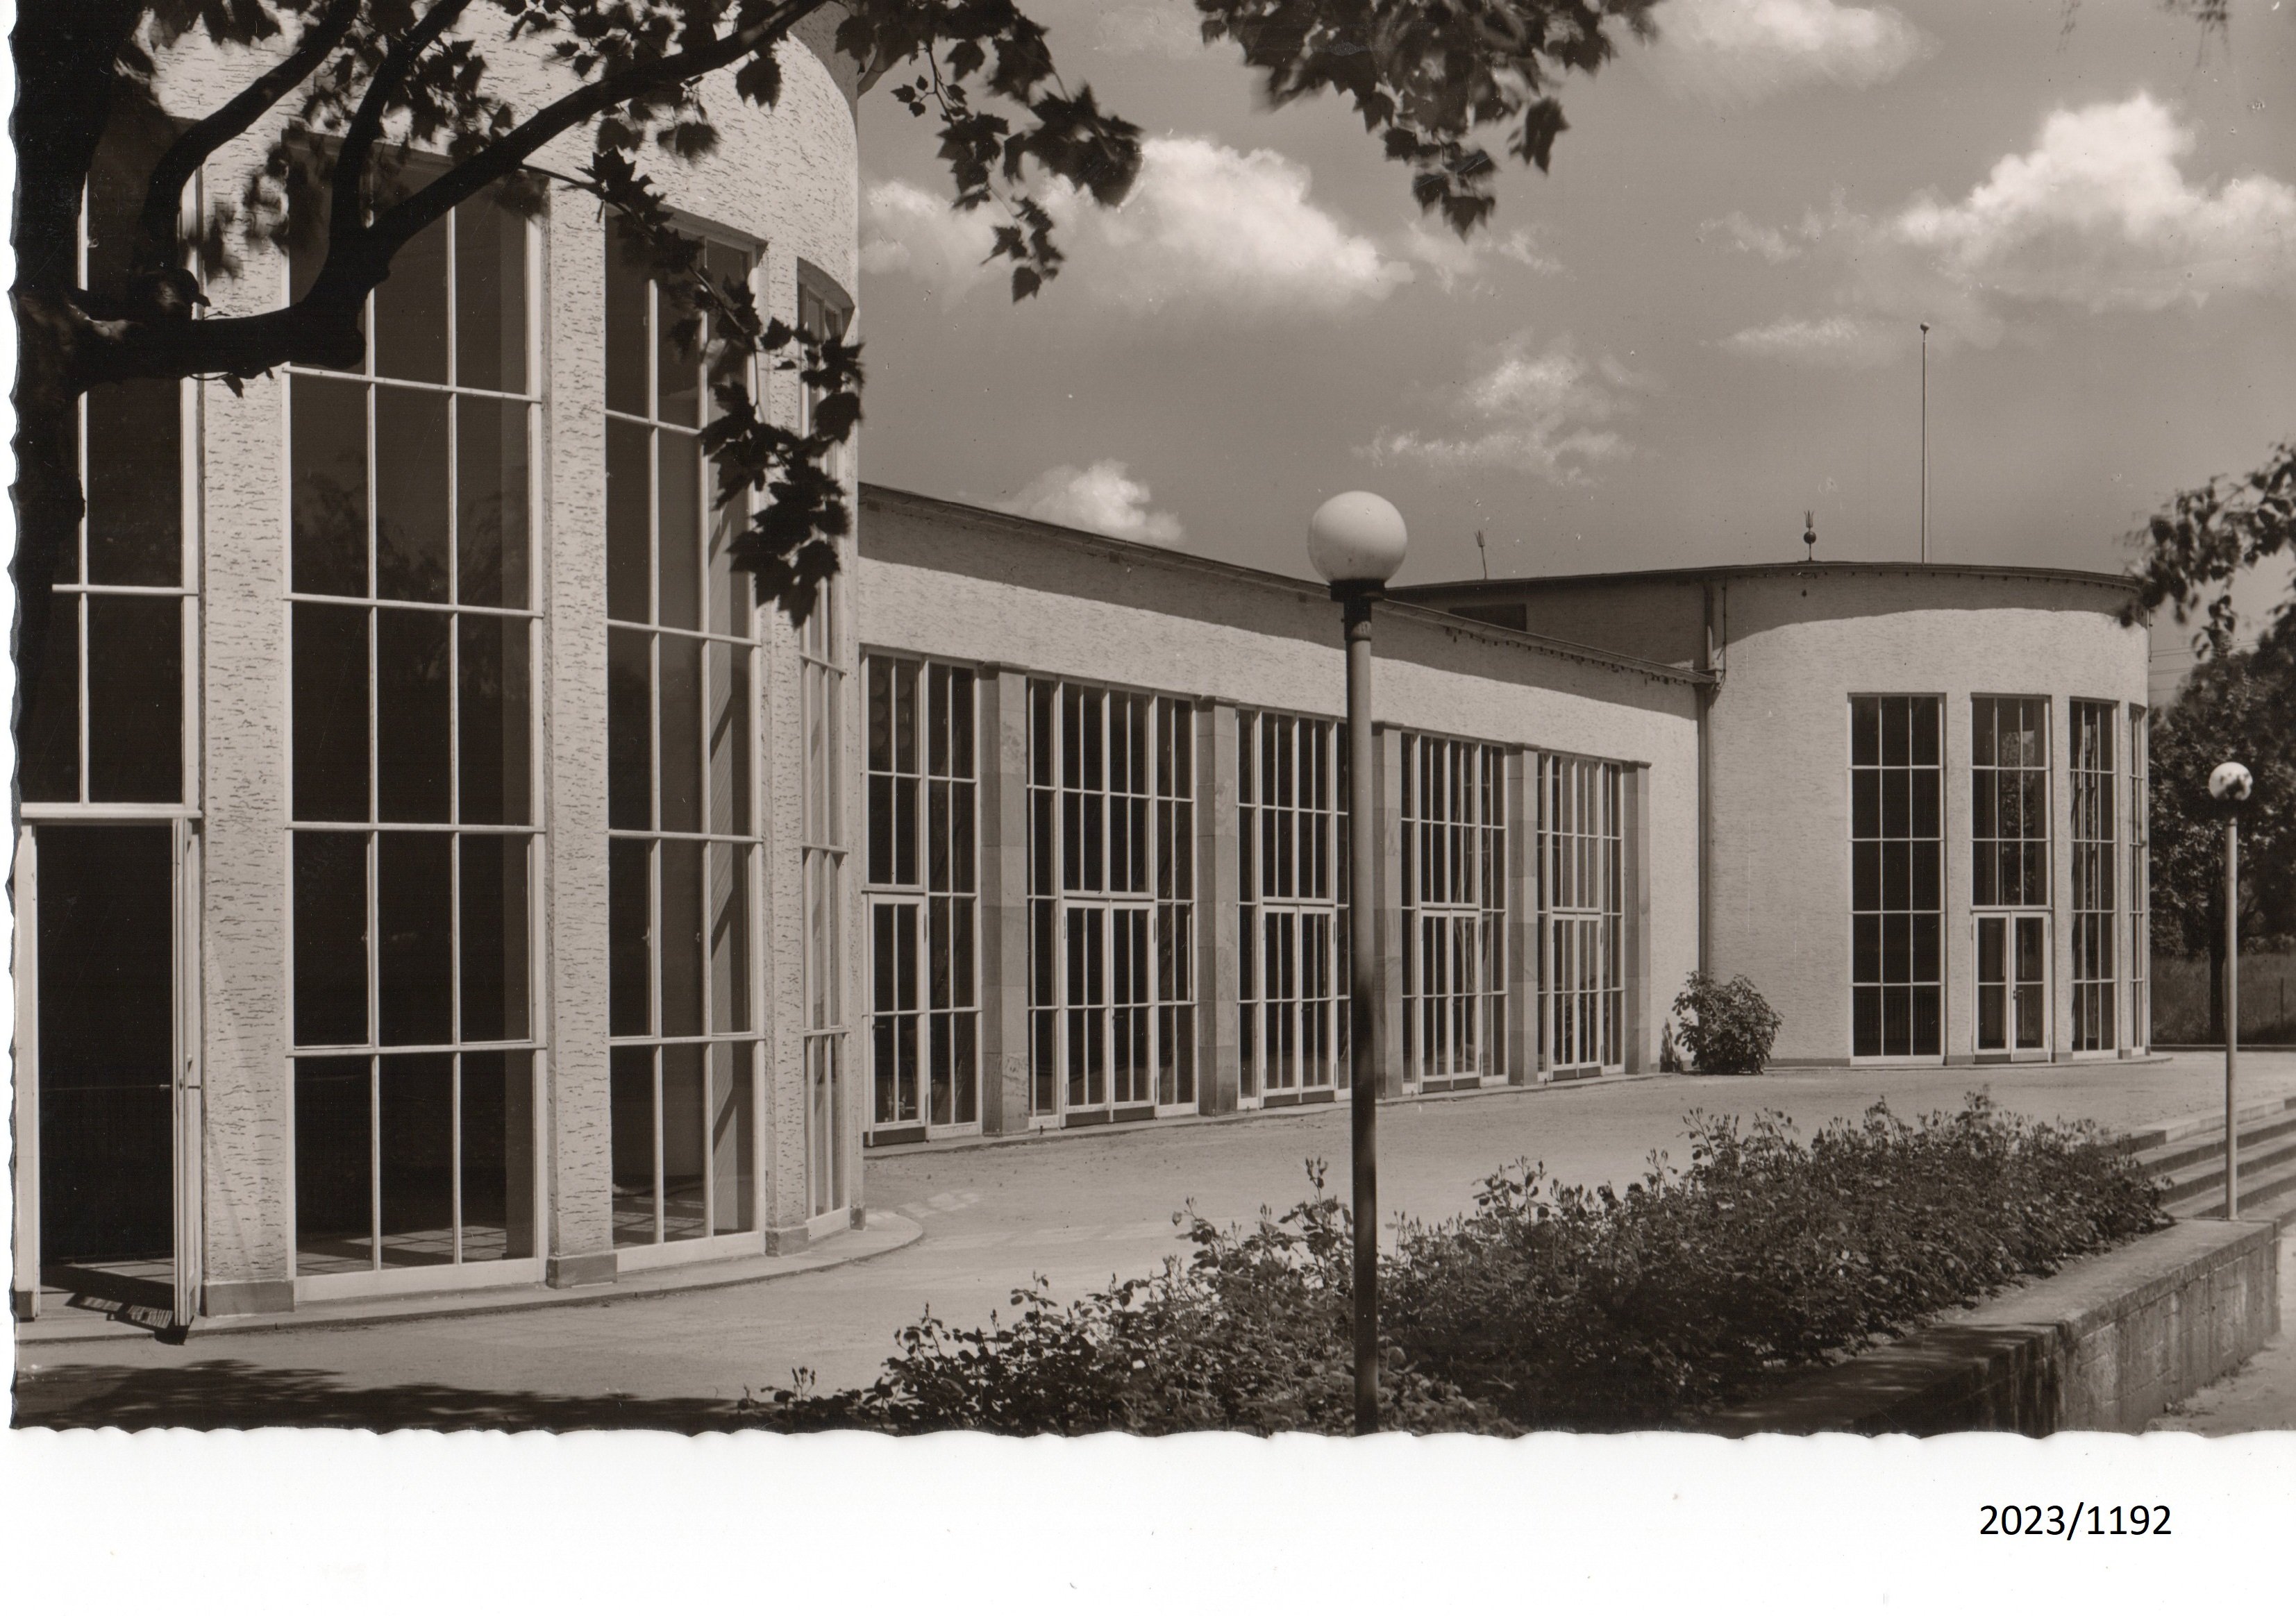 Bad Dürkheim, Brunnenhalle, 1950er Jahre (Stadtmuseum Bad Dürkheim im Kulturzentrum Haus Catoir CC BY-NC-SA)